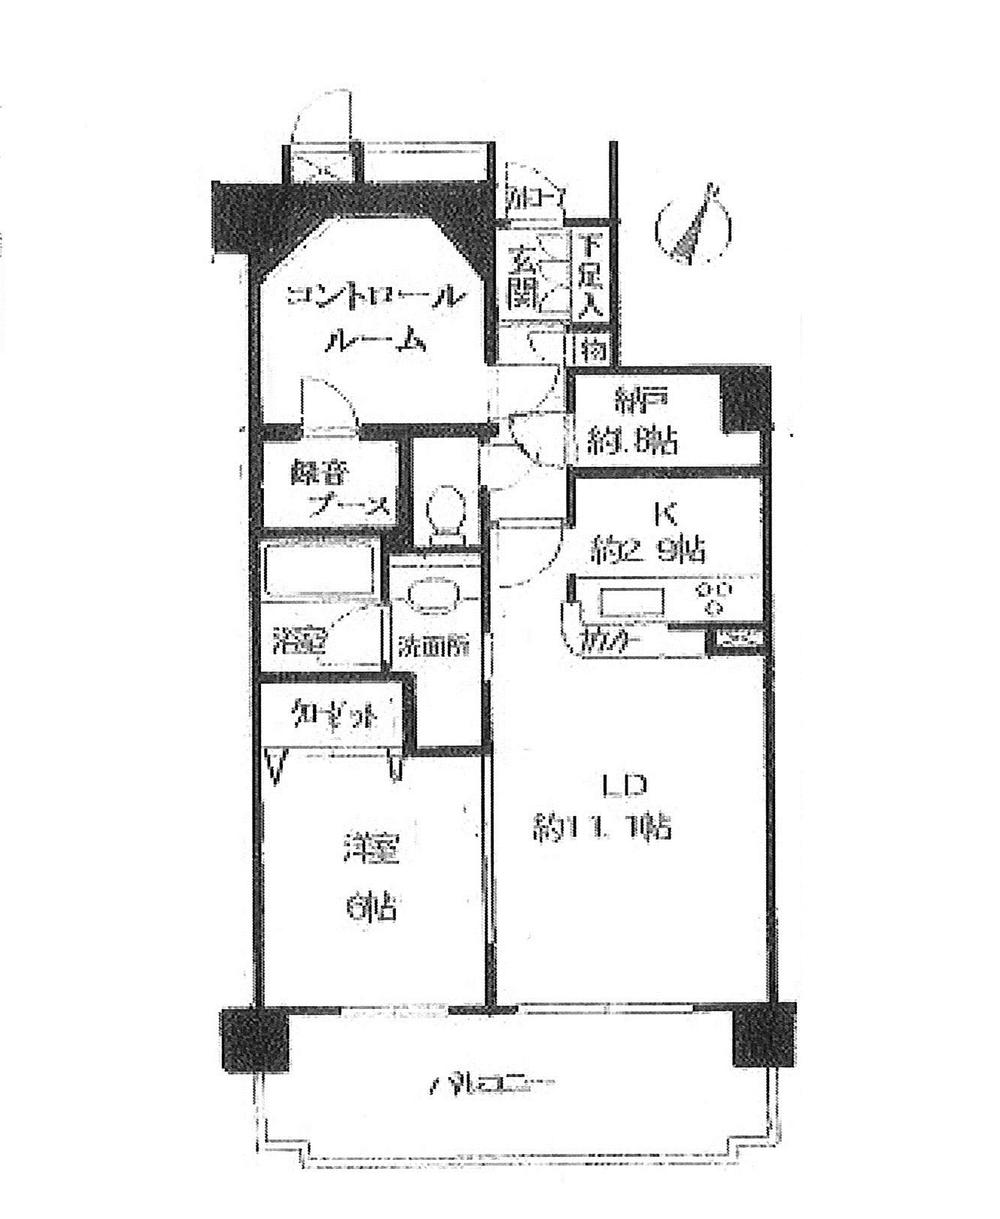 Floor plan. 2LDK + S (storeroom), Price 34,500,000 yen, Occupied area 62.38 sq m , Balcony area 11.6 sq m